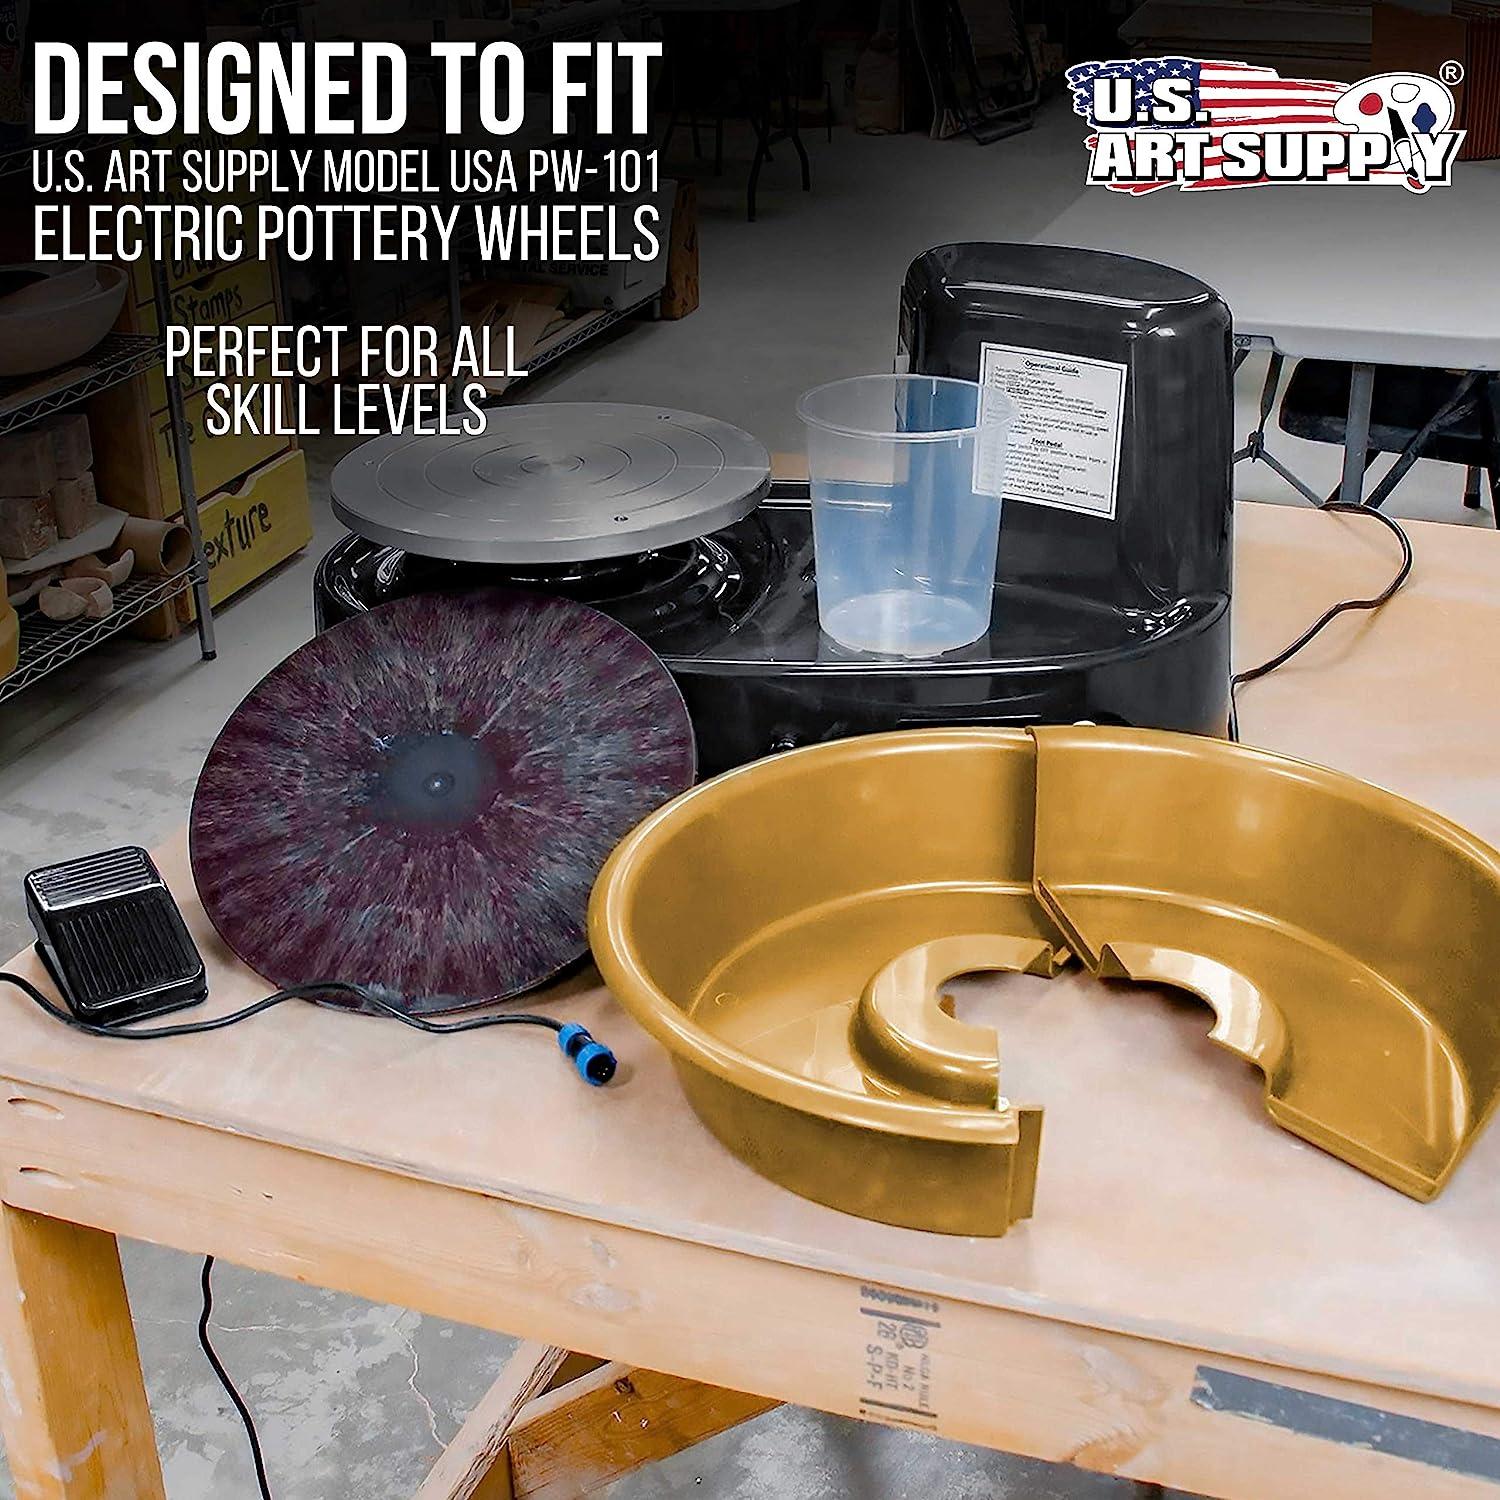 U.S. Art Supply - 11 Round Plastic Pottery Wheel Bats, Set of 2